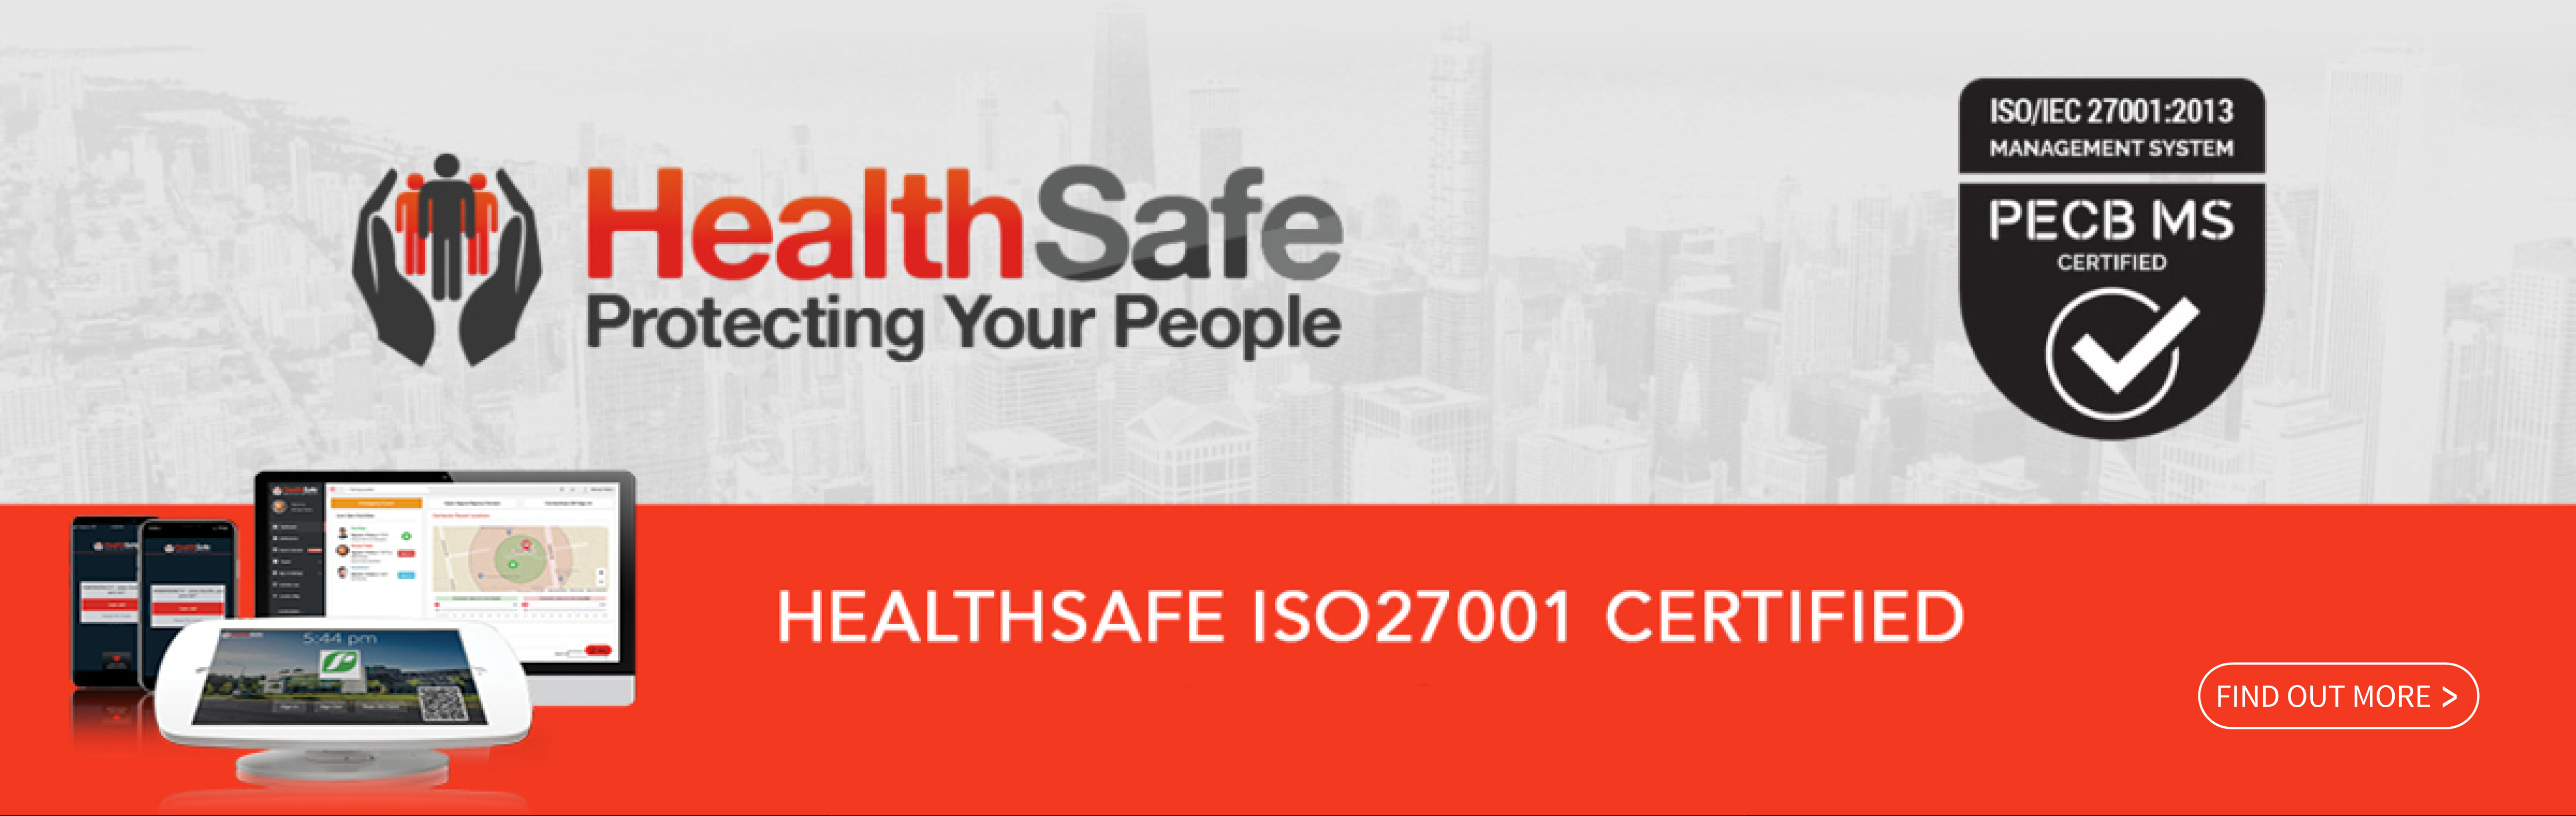 HealthSafe Certification